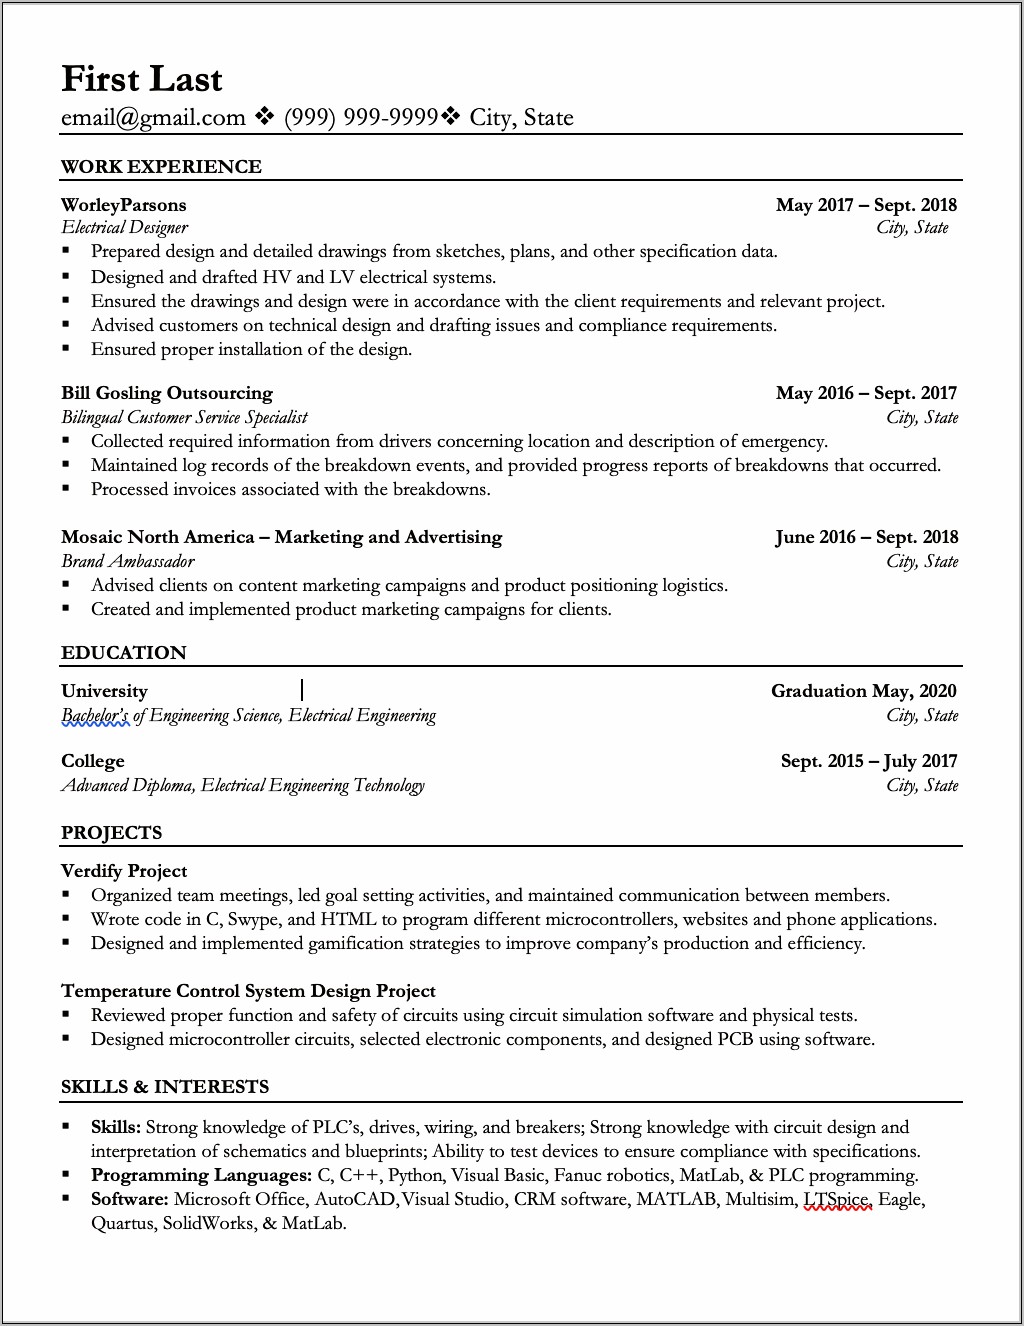 Electrical Engineering Undergrad Student Sample Resume